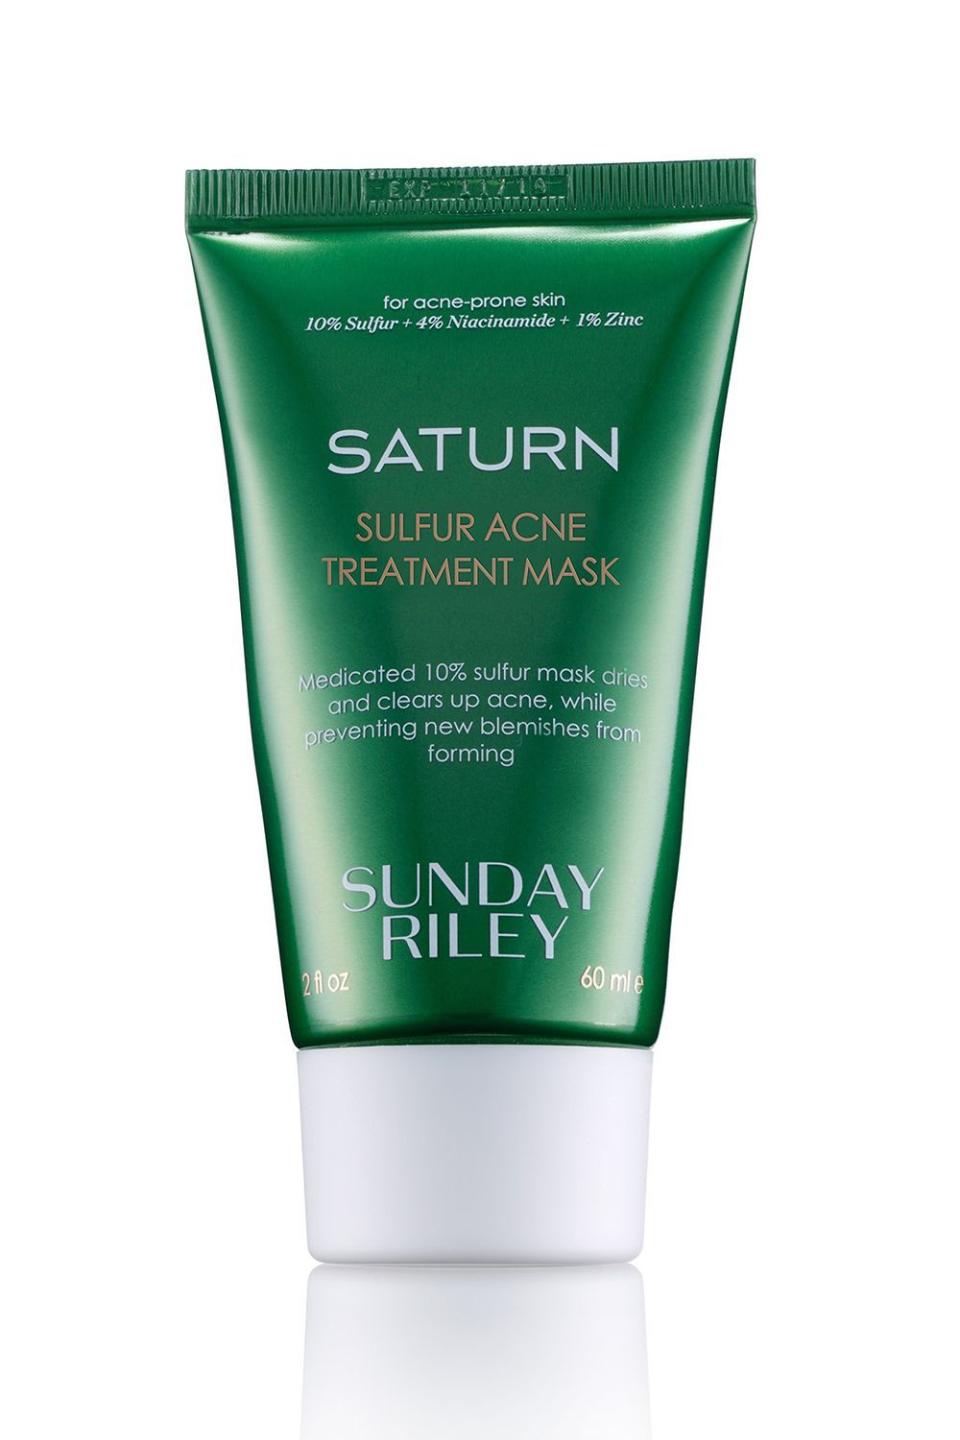 14) Sunday Riley Saturn Sulfur Acne Treatment Mask